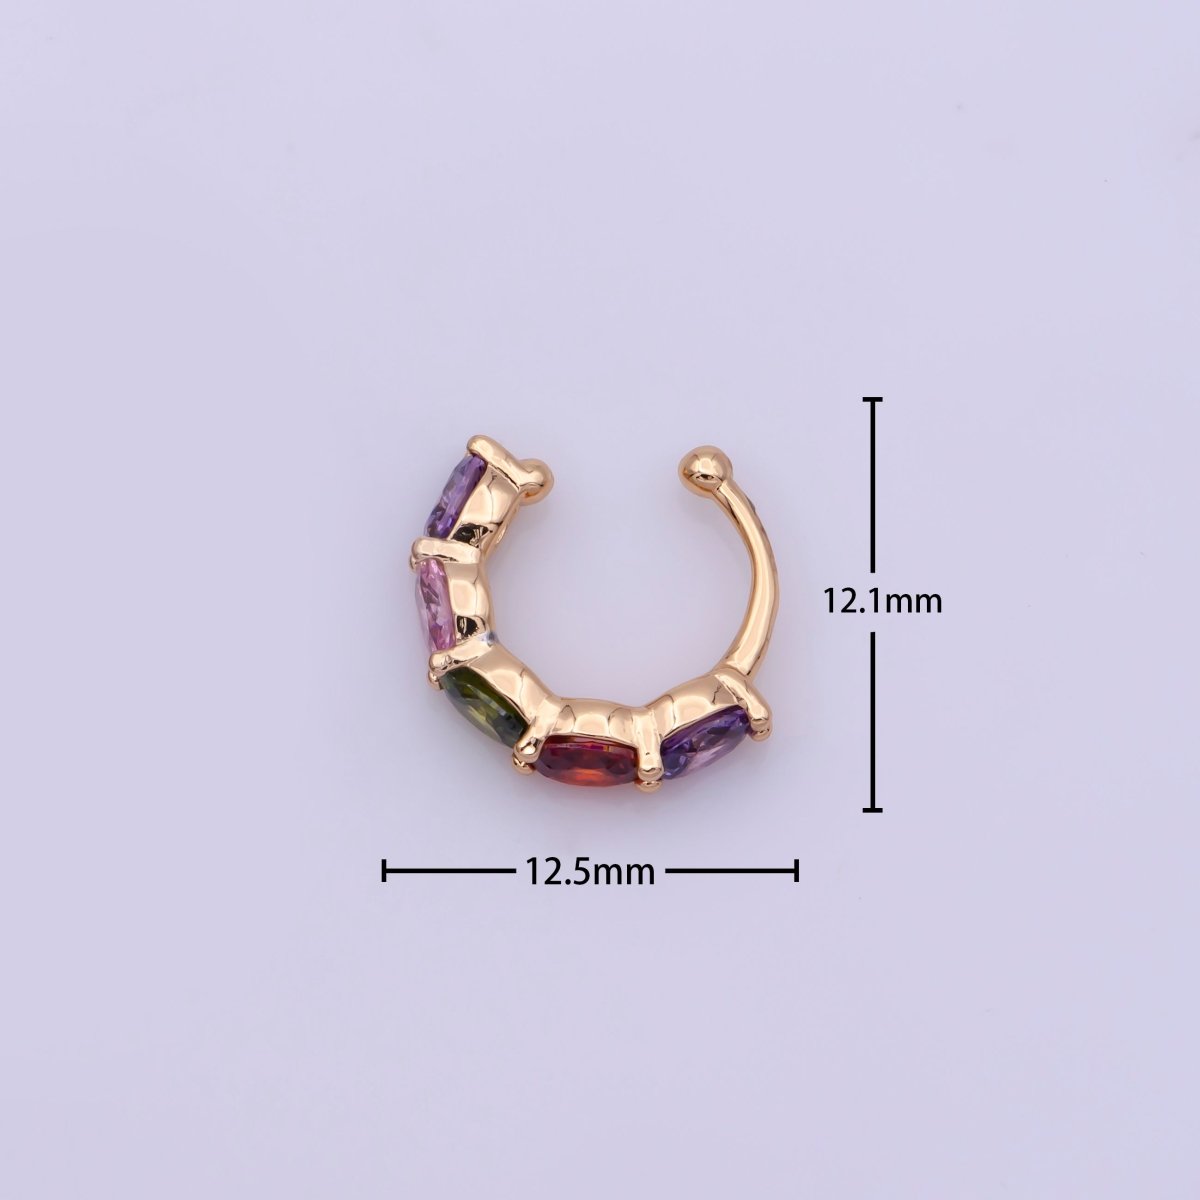 1x Rainbow Micro Pace CZ Ear Cuff 18K Gold Filled Ear cuff Earring, Nonpierced for Cartilage, single Earring, Minimalist ear cuff - DLUXCA